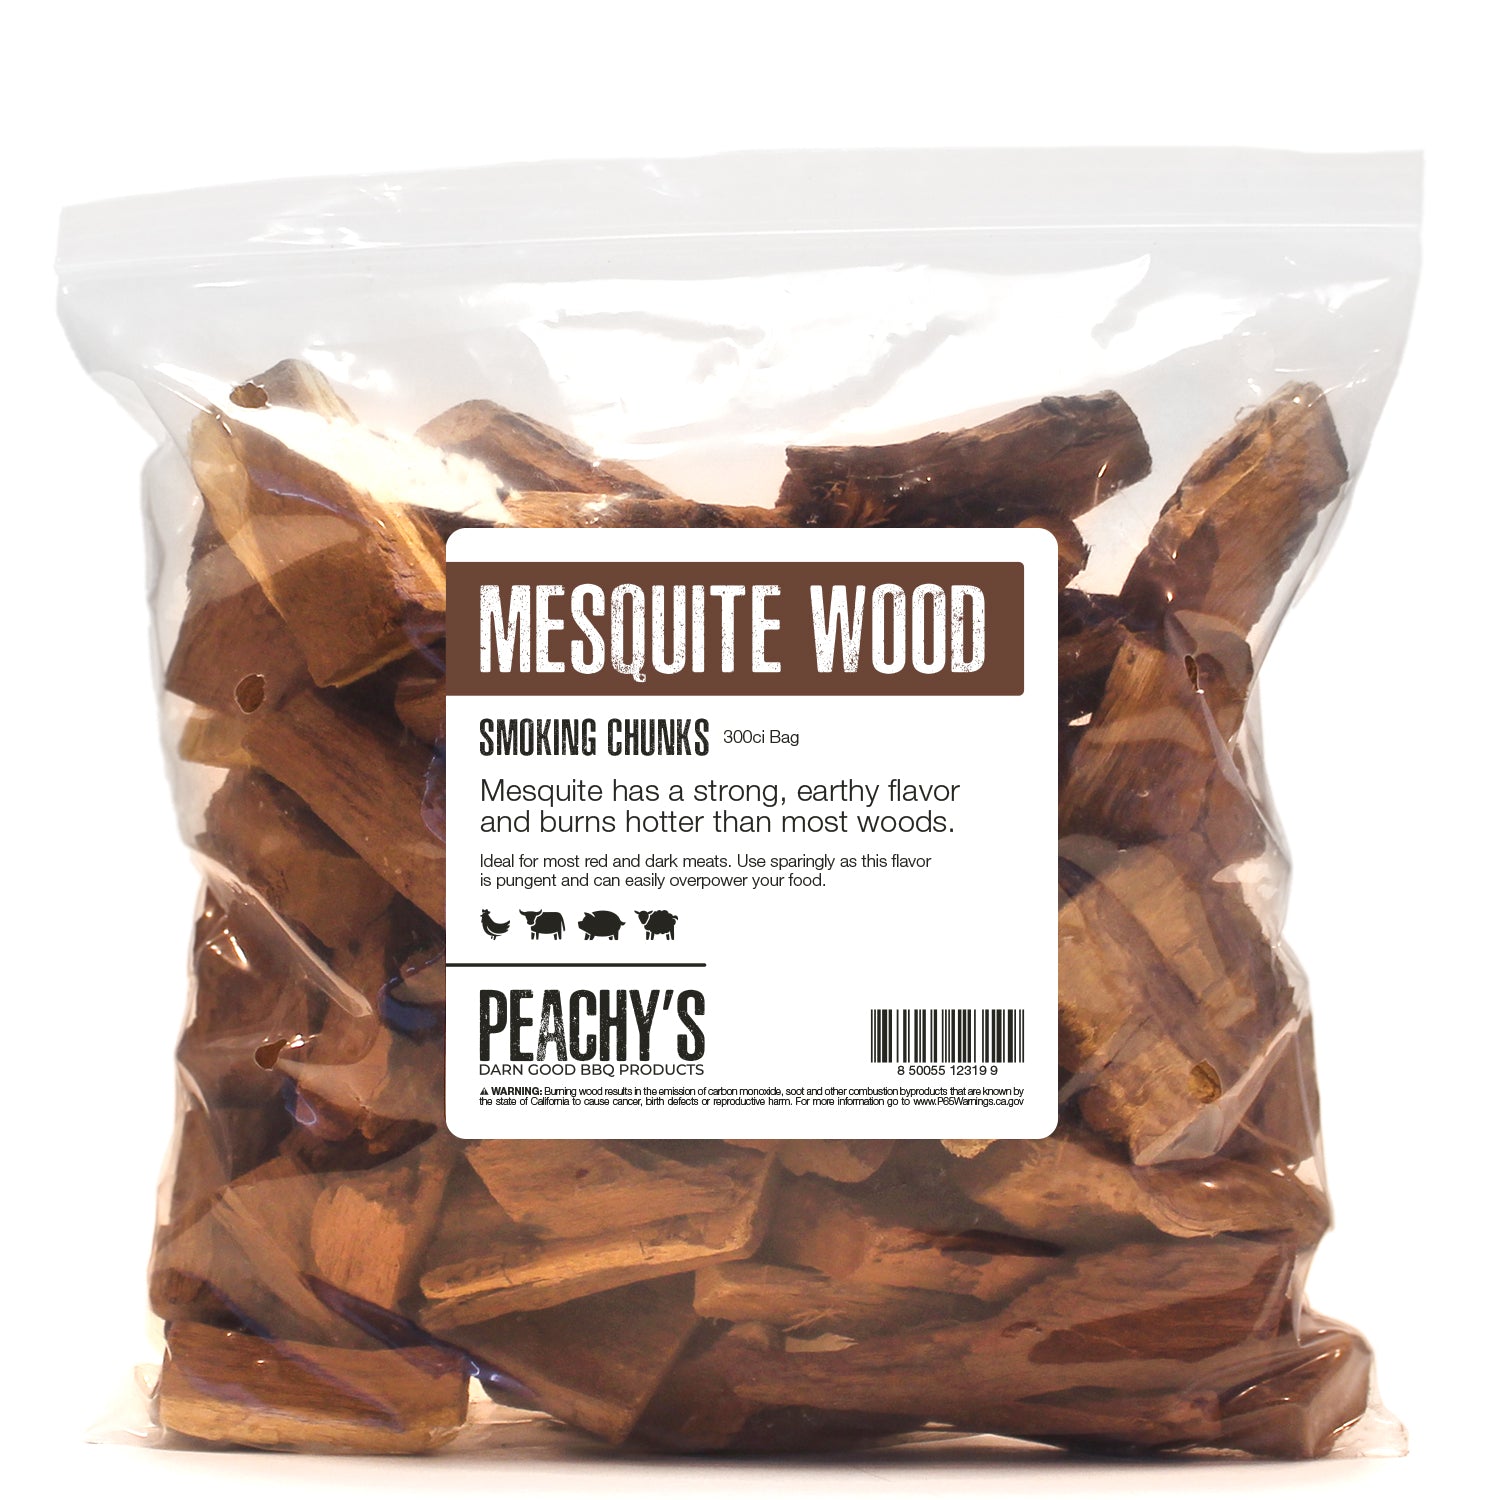 MESQUITE Chunks | 300ci Bag of Premium Smoking Woods by PEACHY'S